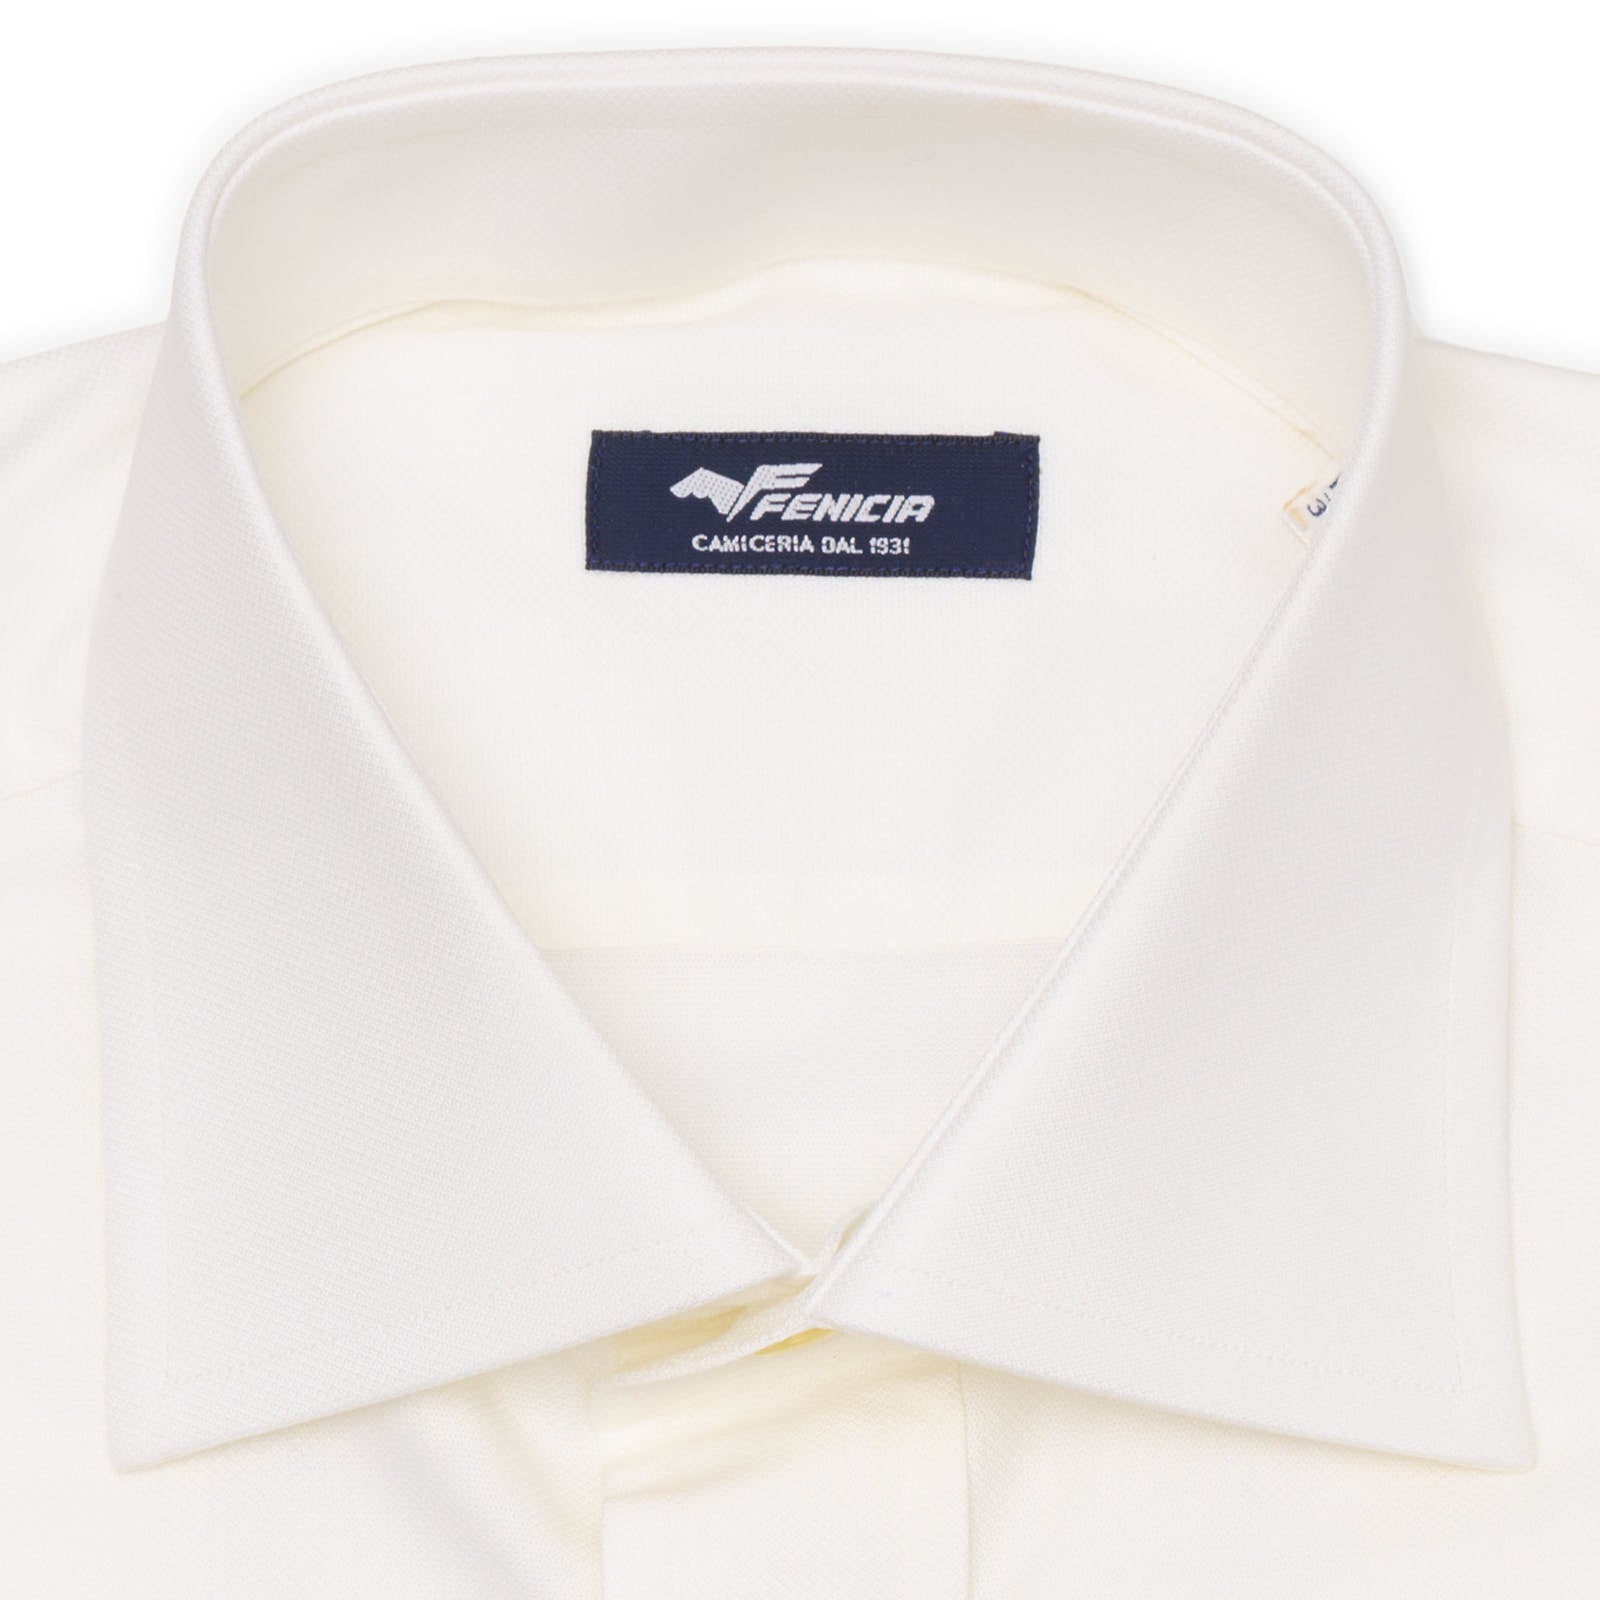 FENICIA Milano Ivory Royal Oxford Cotton French Cuff Dress Shirt EU 39 NEW US 15.5